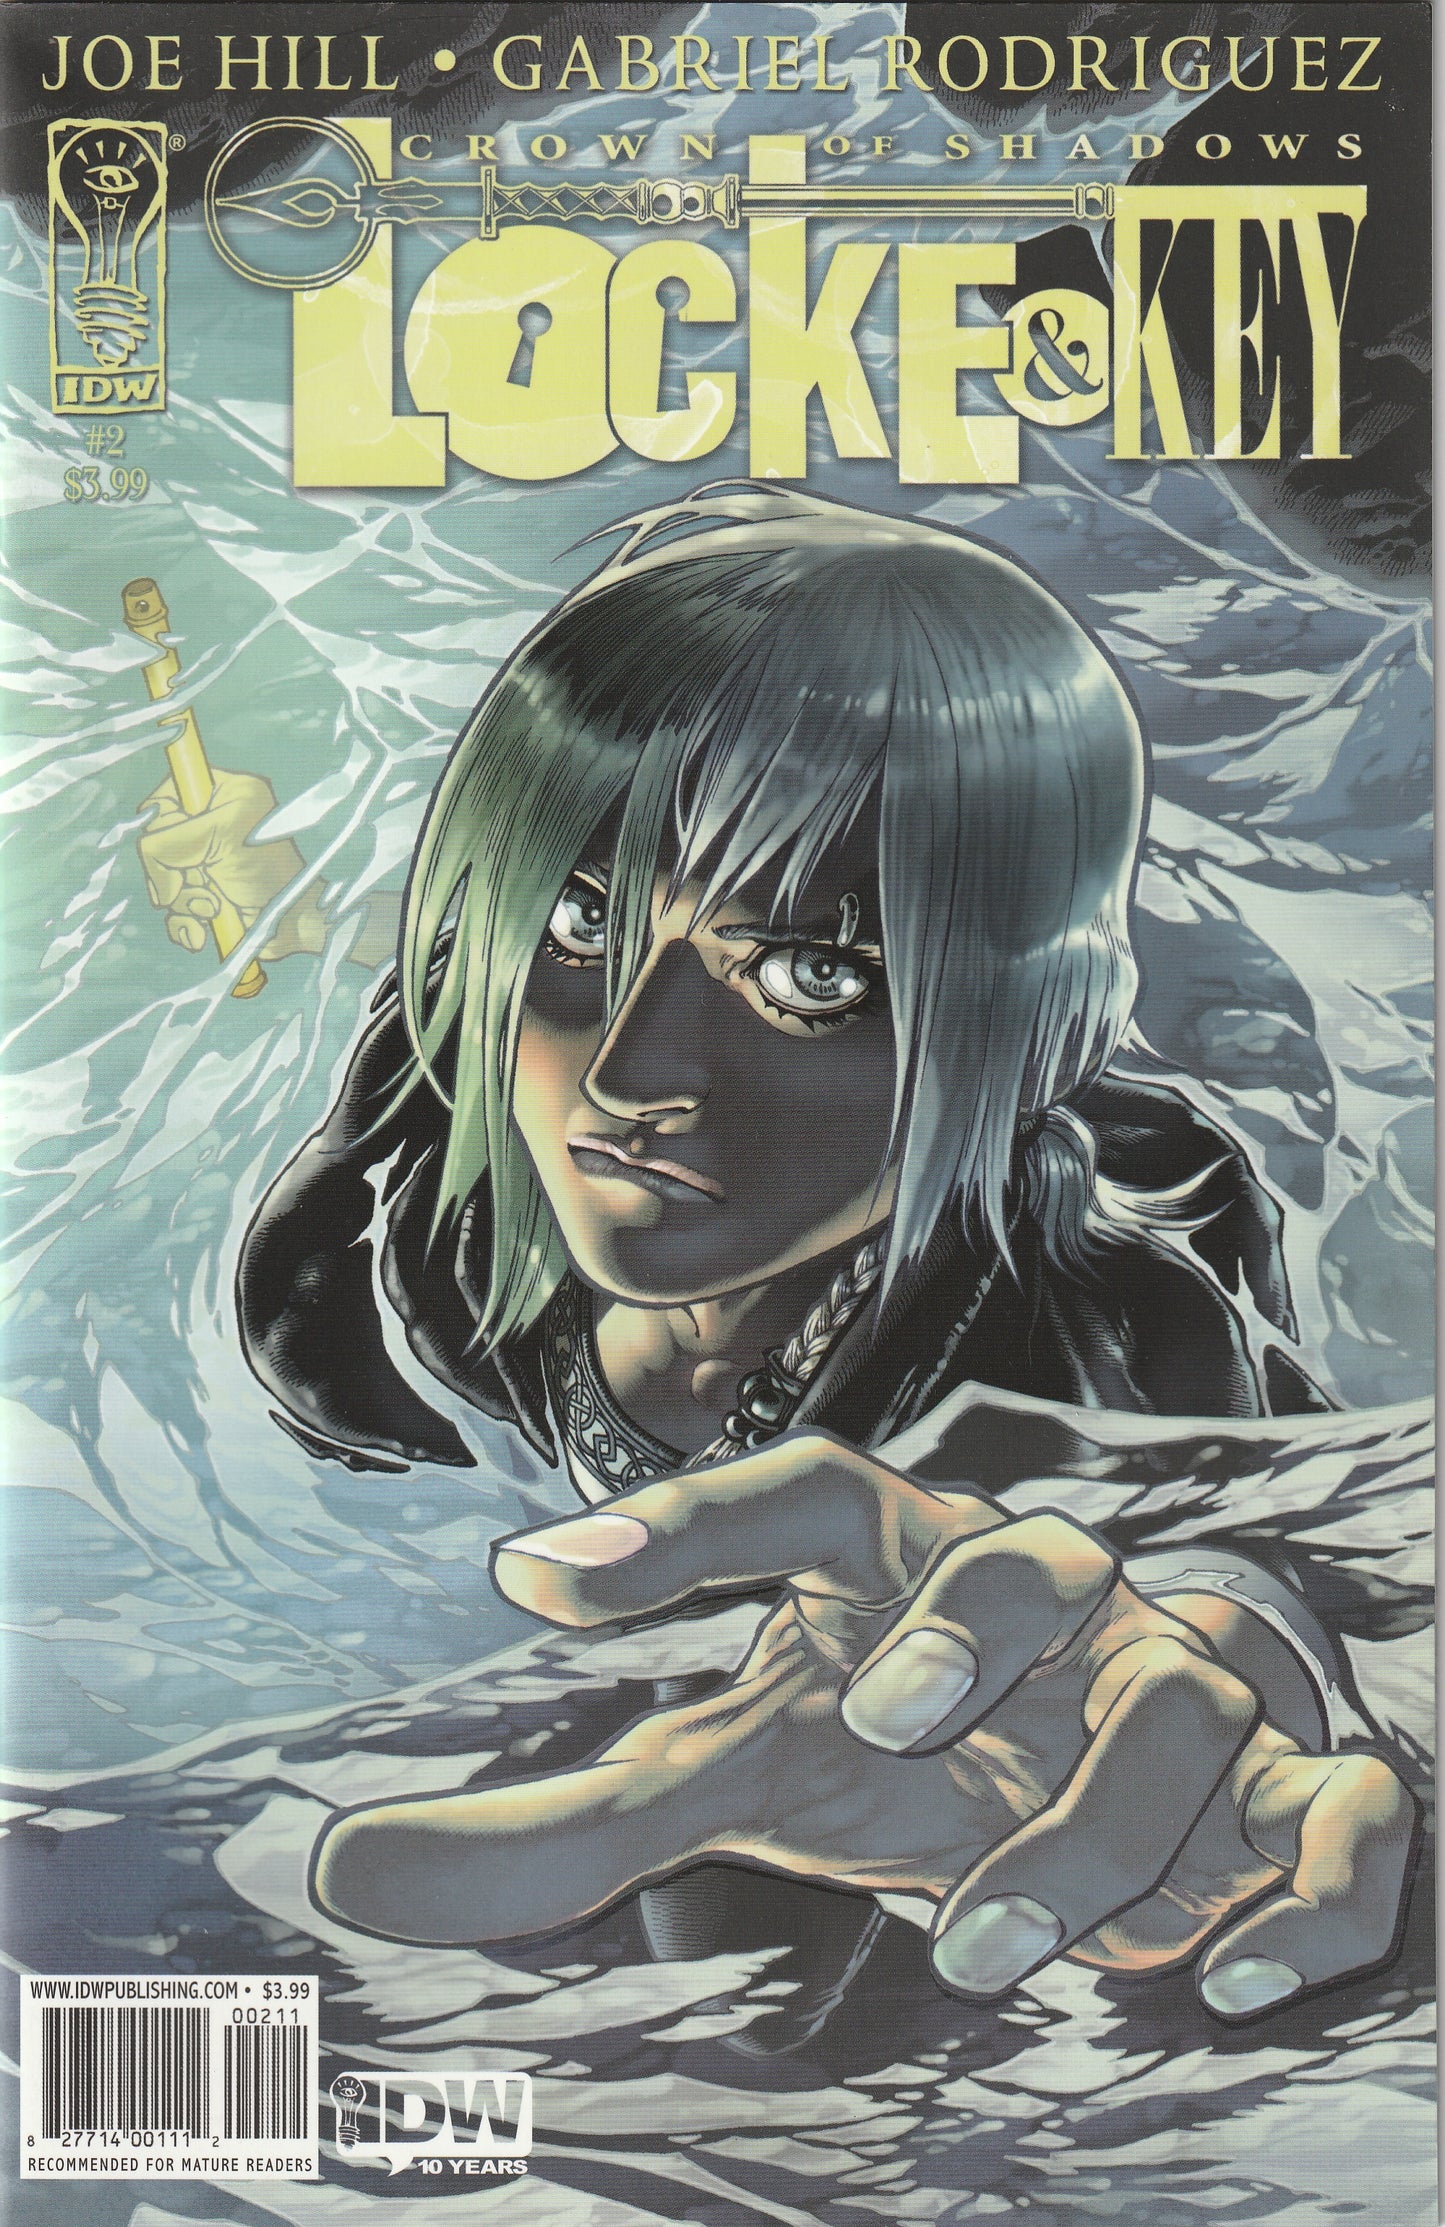 Locke & Key: Crown of Shadows #2 (of 6, 2009) - Joe Hill